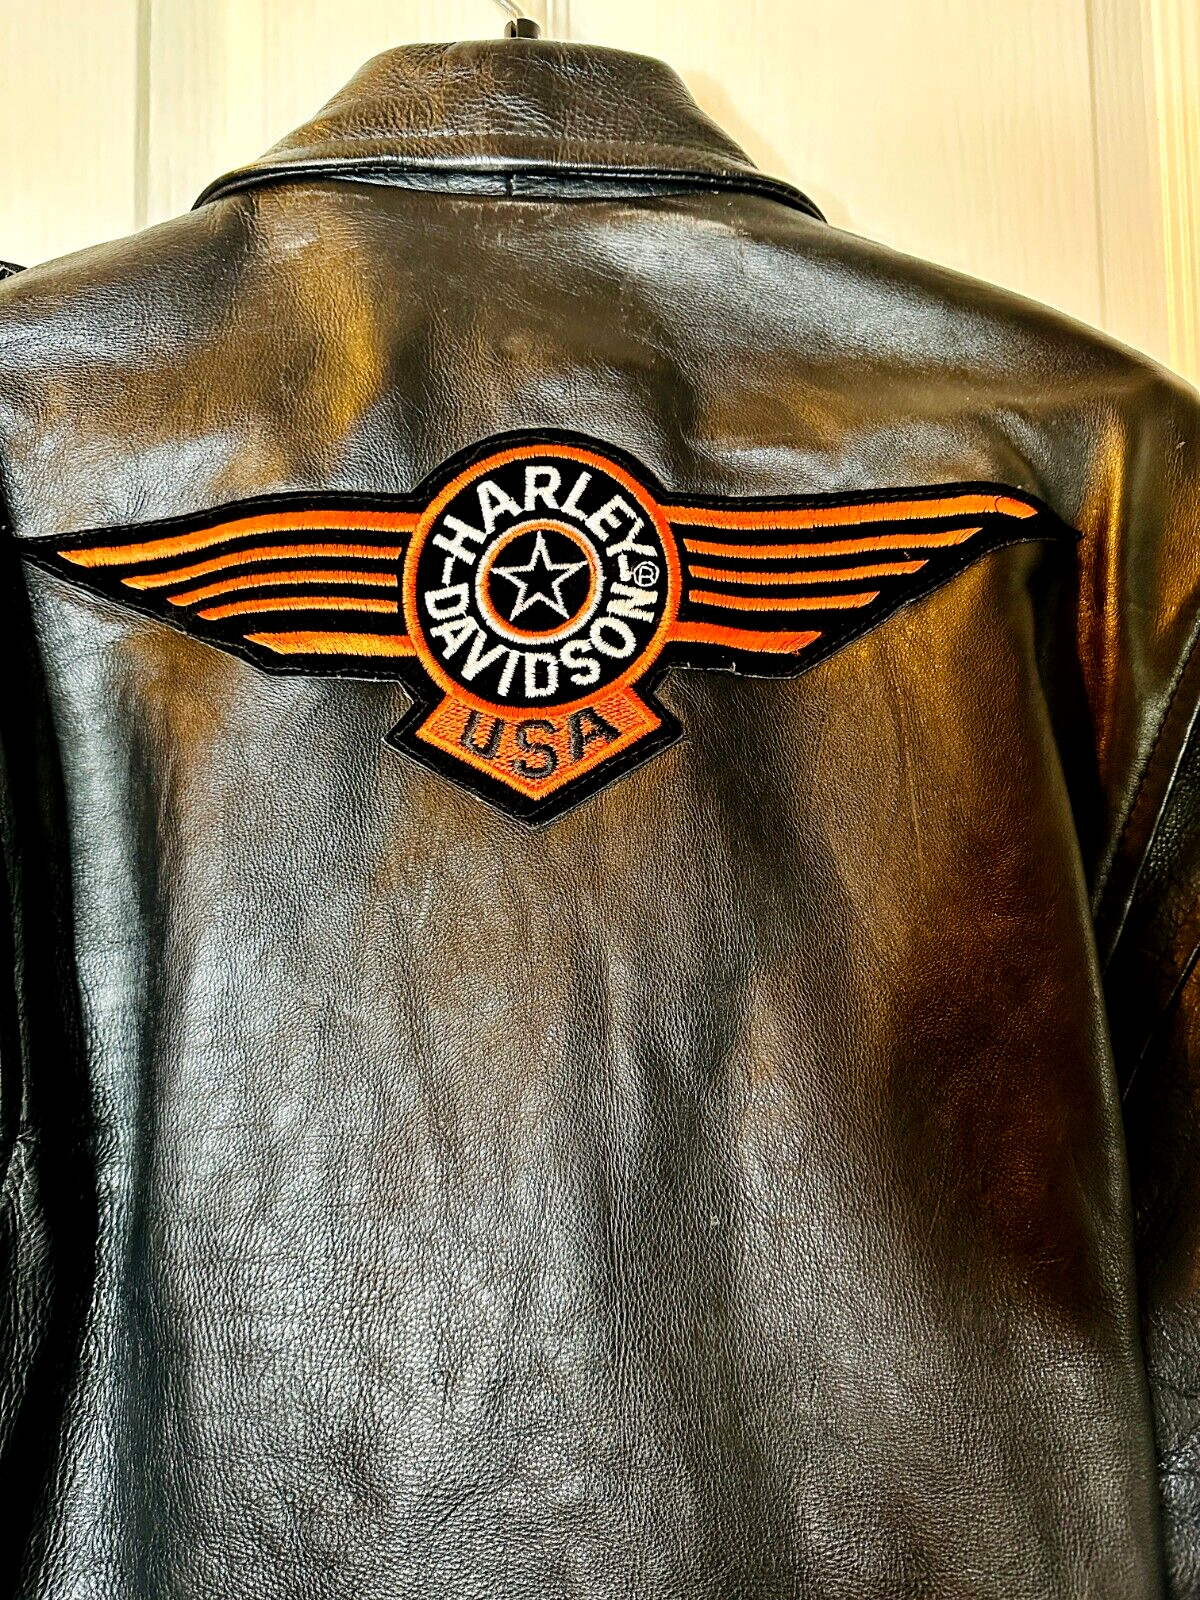 Harley Davidson Vintage Leather Motorcycle Riding Jacket Embroidered Size 46